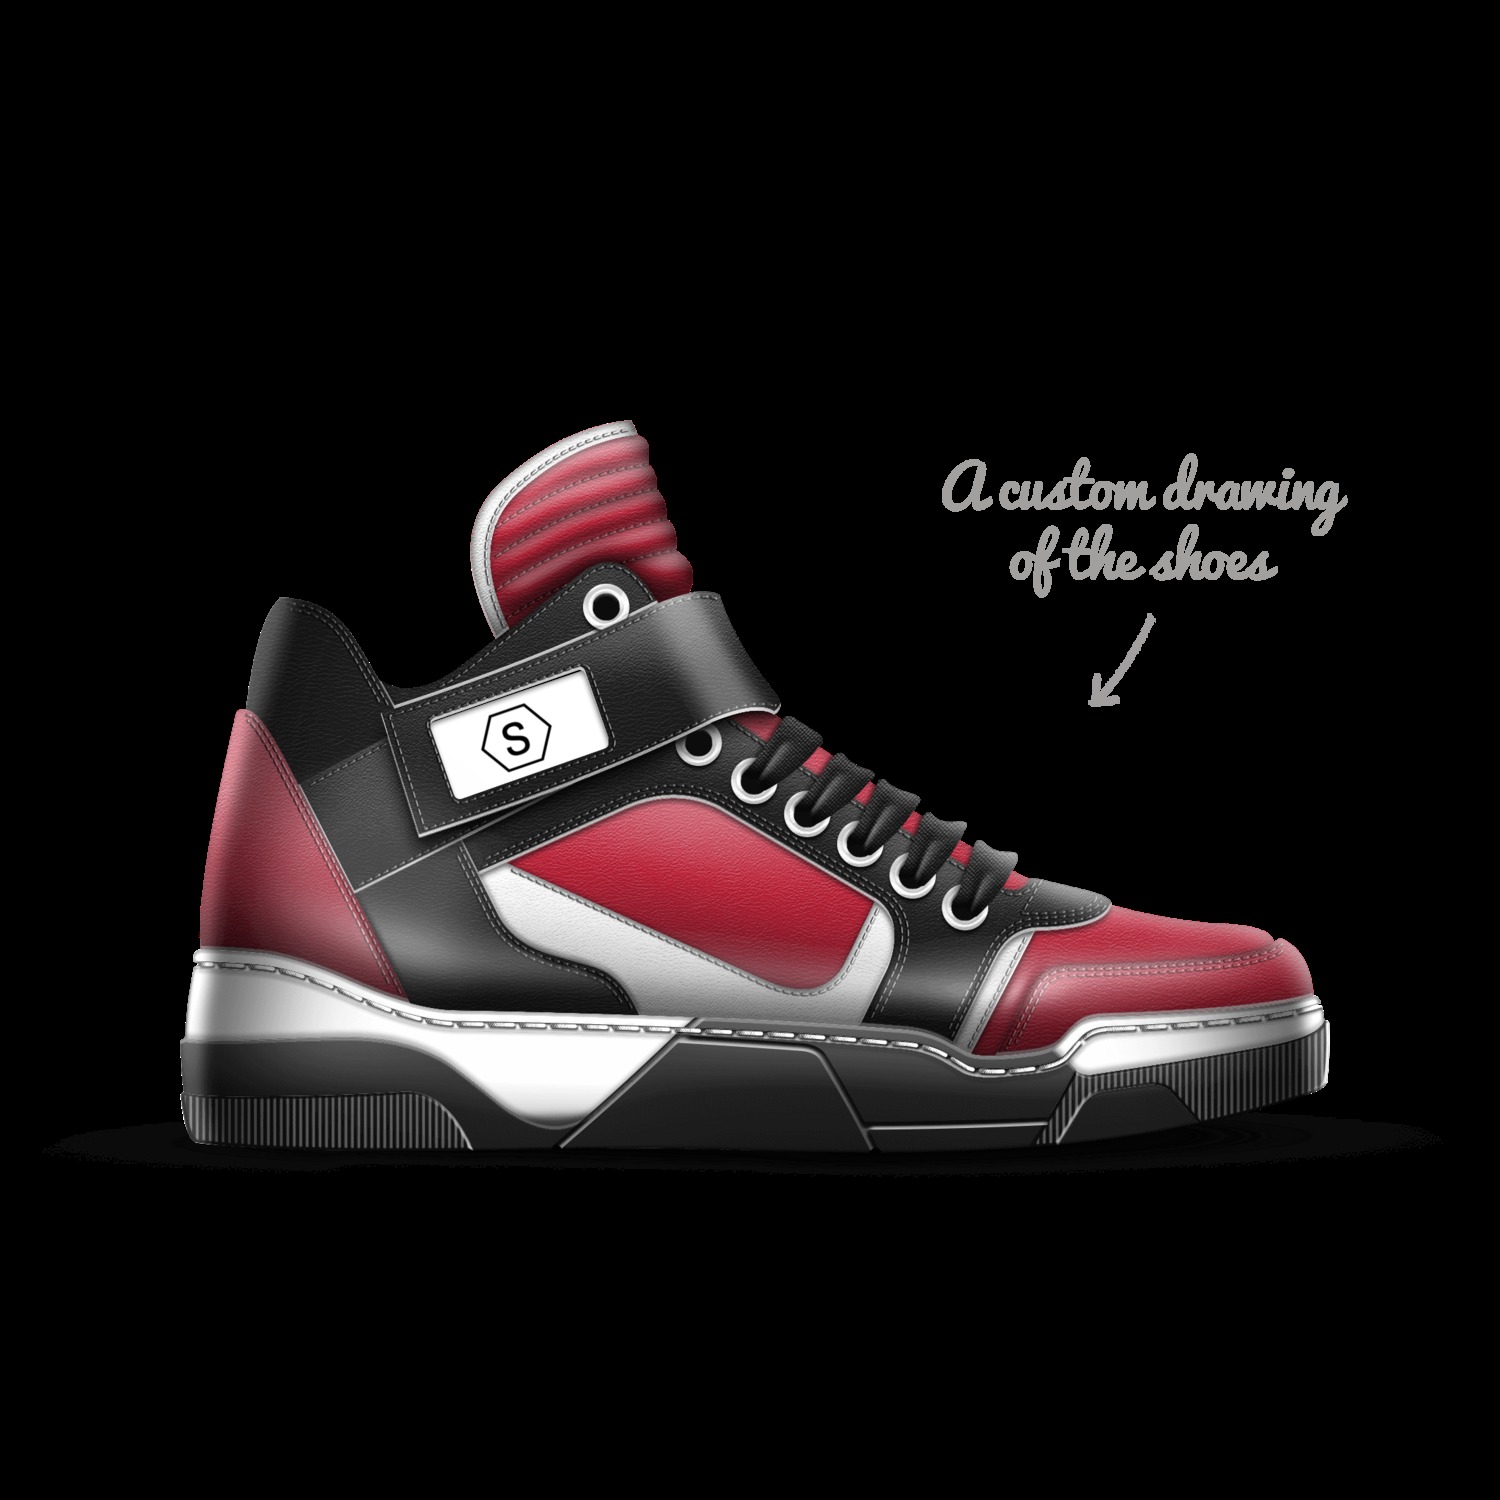 A Custom Shoe concept by Ben Graham